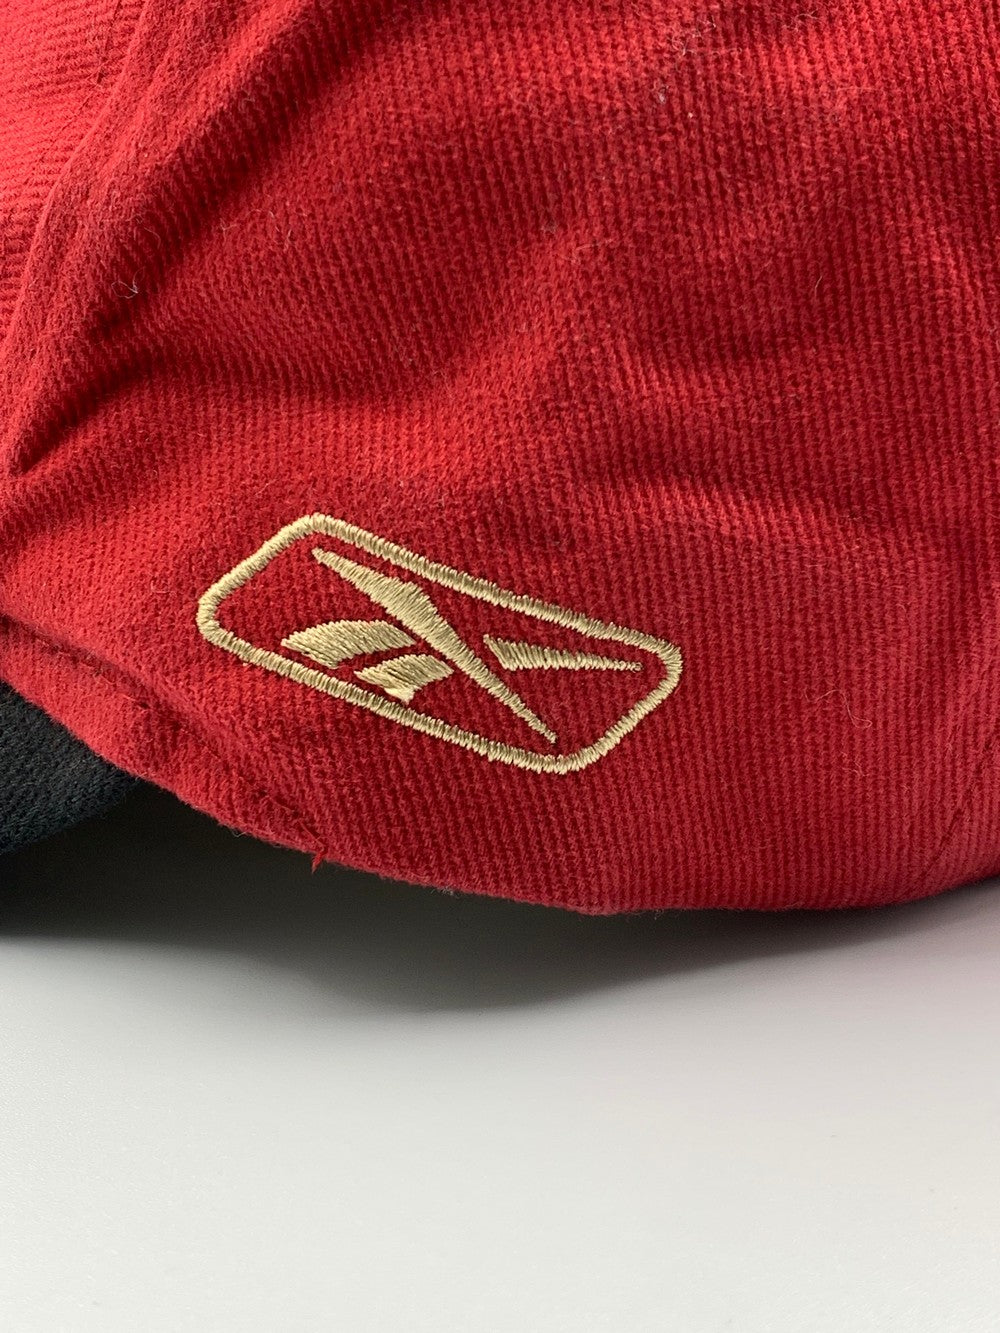 Reebok Branded Original Branded Caps For Men